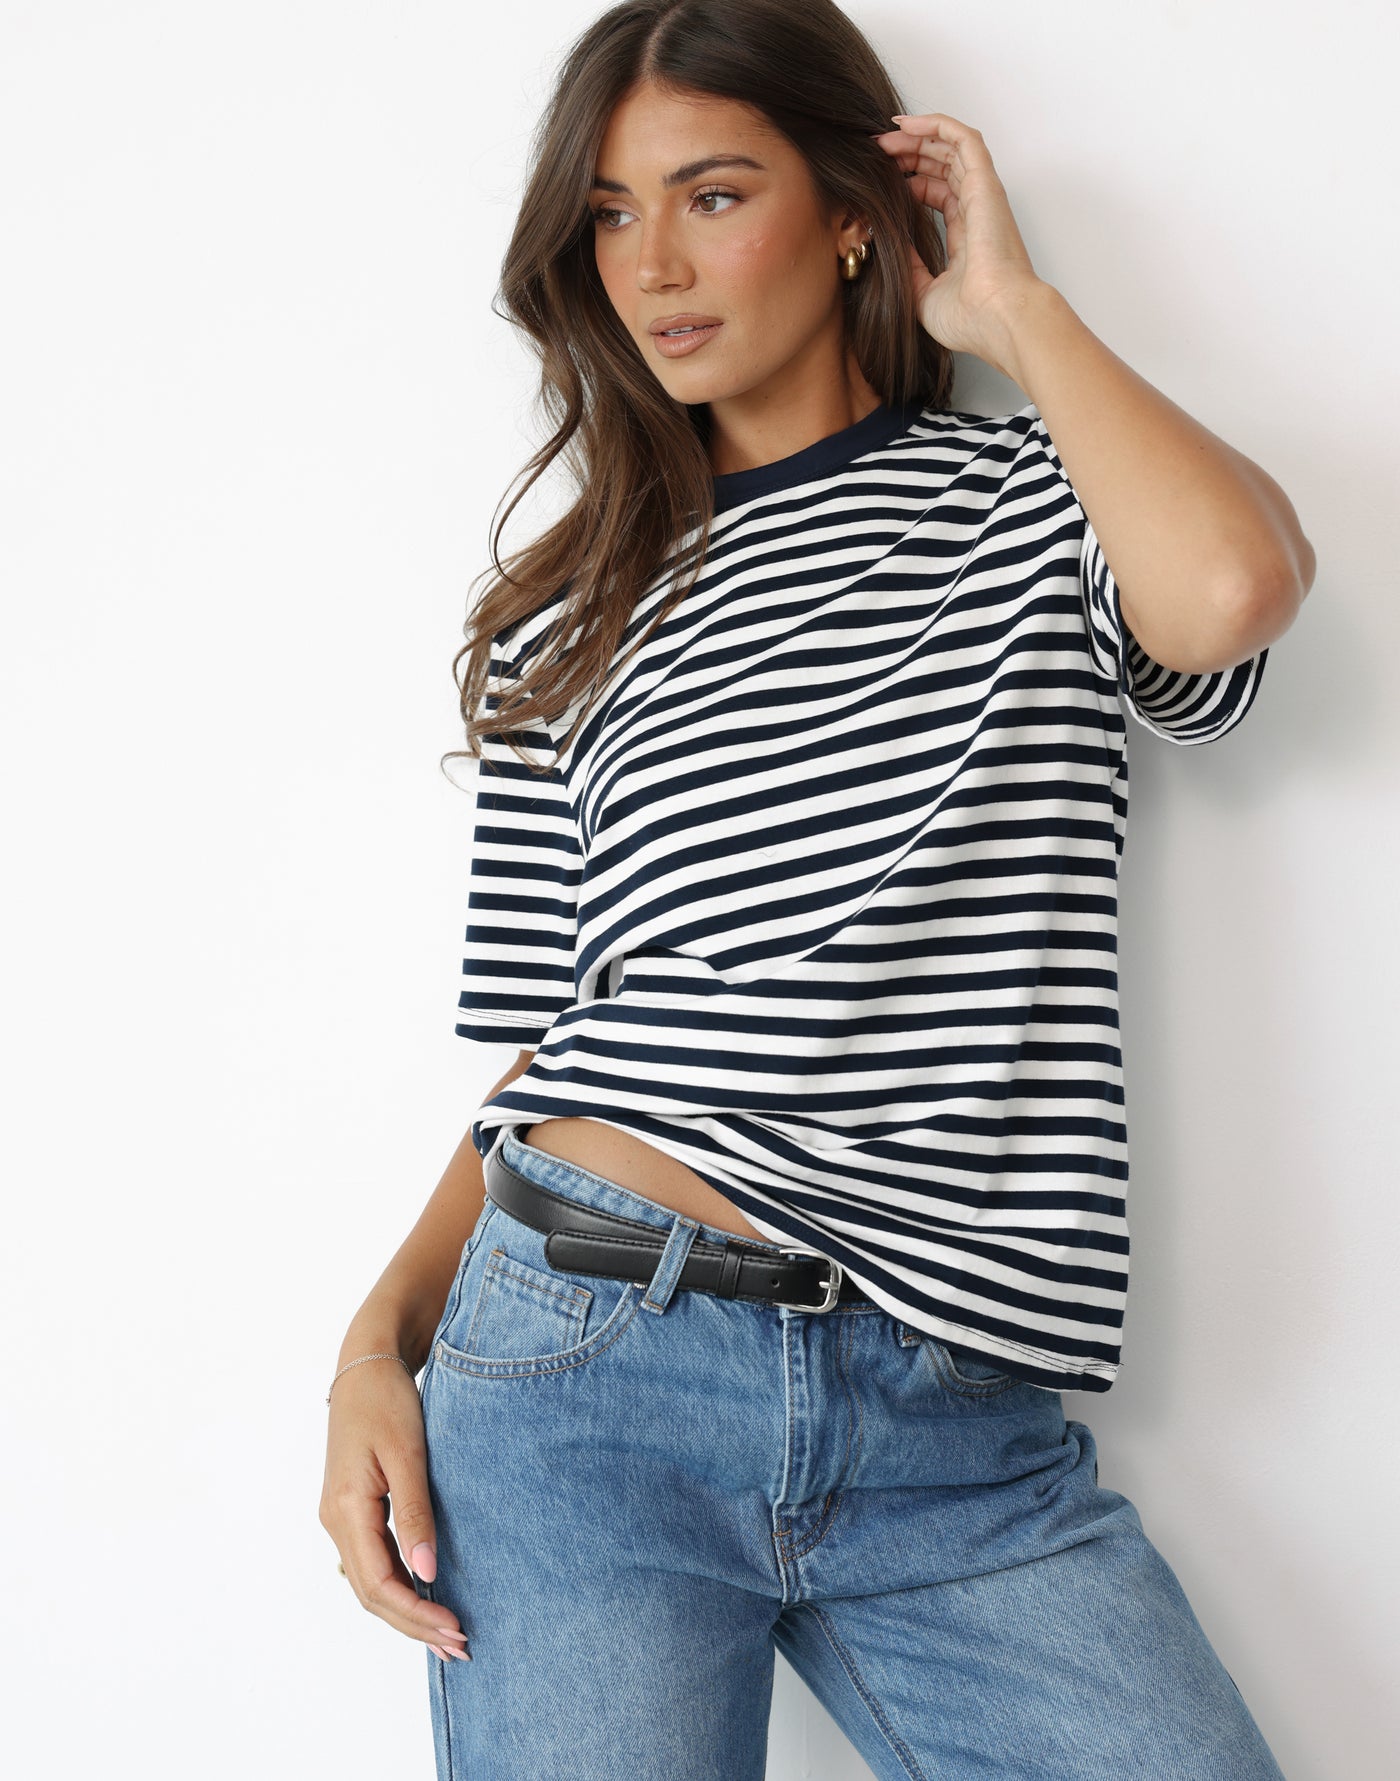 Ellyse T-Shirt (Navy/White Stripe) - - Women's Top - Charcoal Clothing